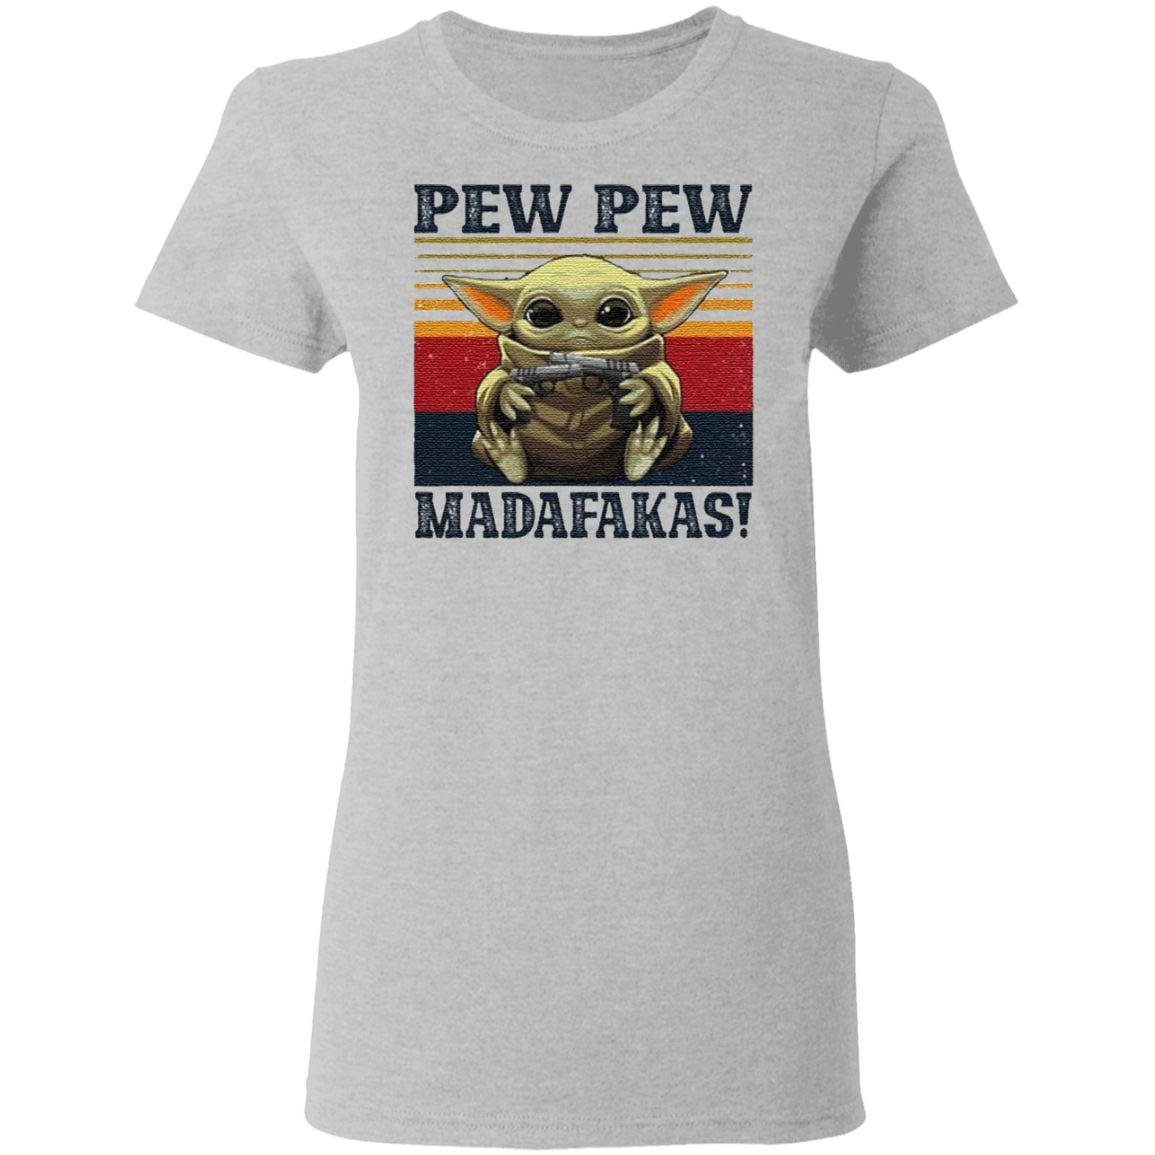 Baby Yoda Pew Pew madafakas vintage tshirt